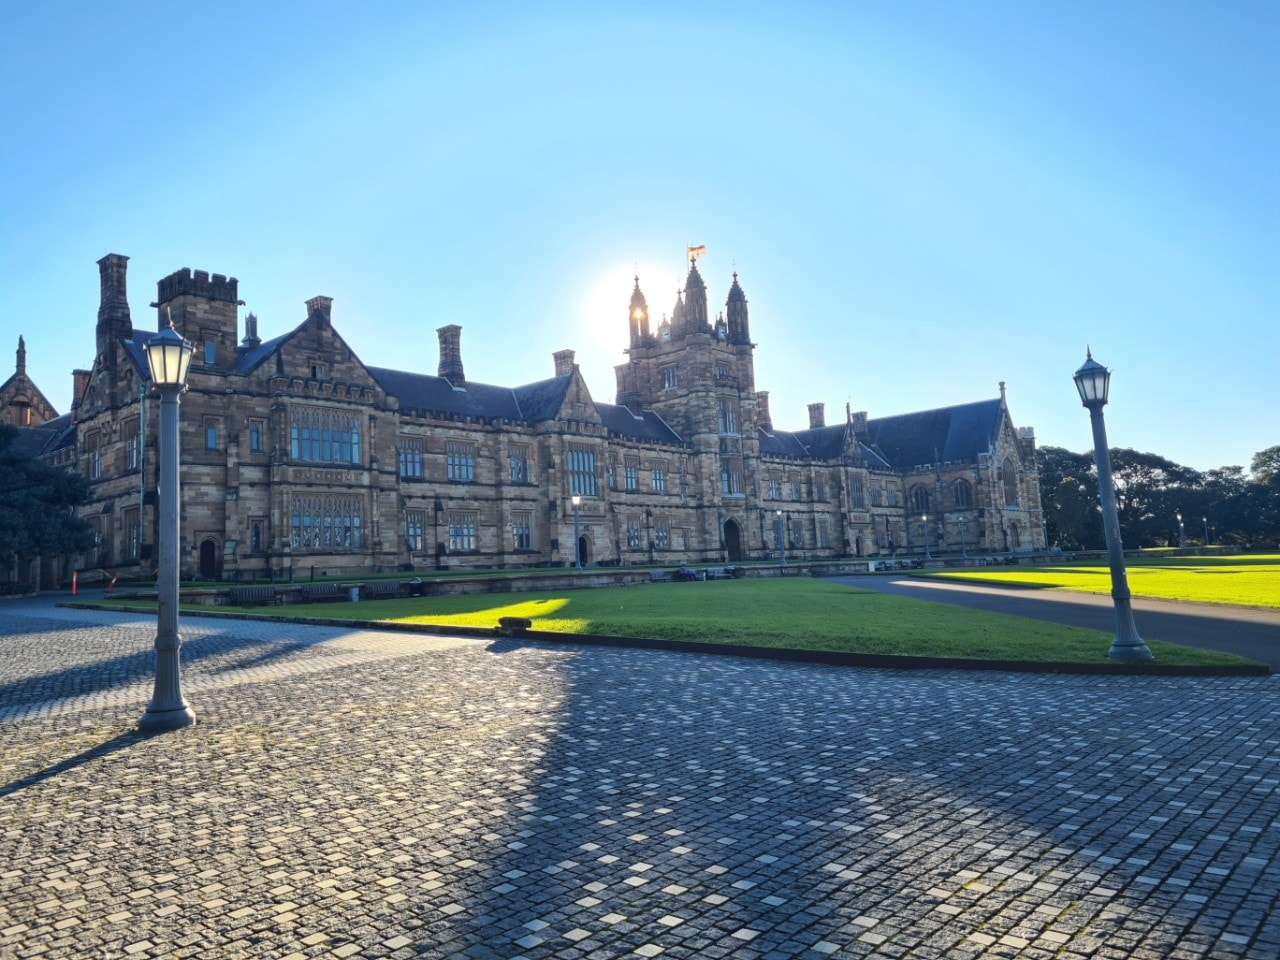 The University of Sydney's sandstone Quadrangle, with the sun shining behind (photo credit Joel Murray)